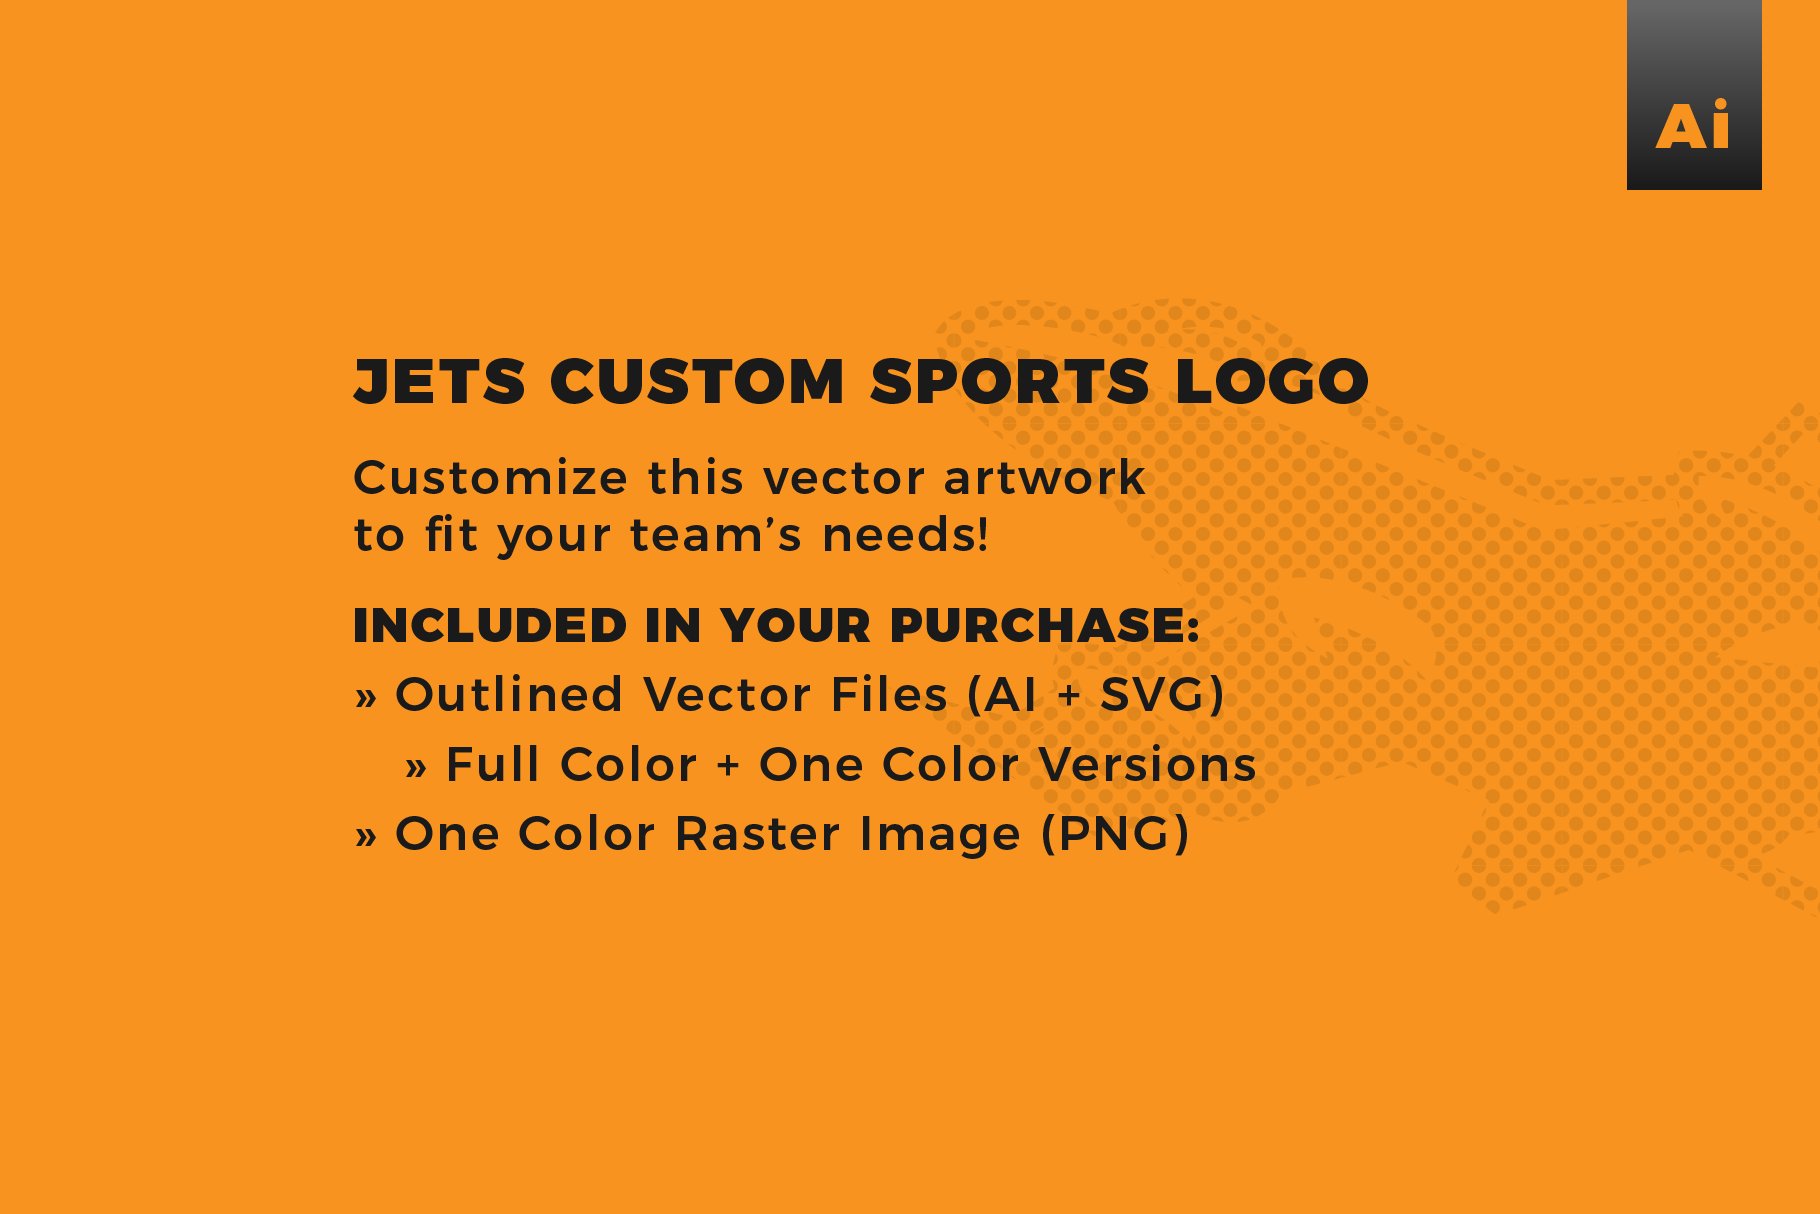 Jets | Custom Sports Logo preview image.